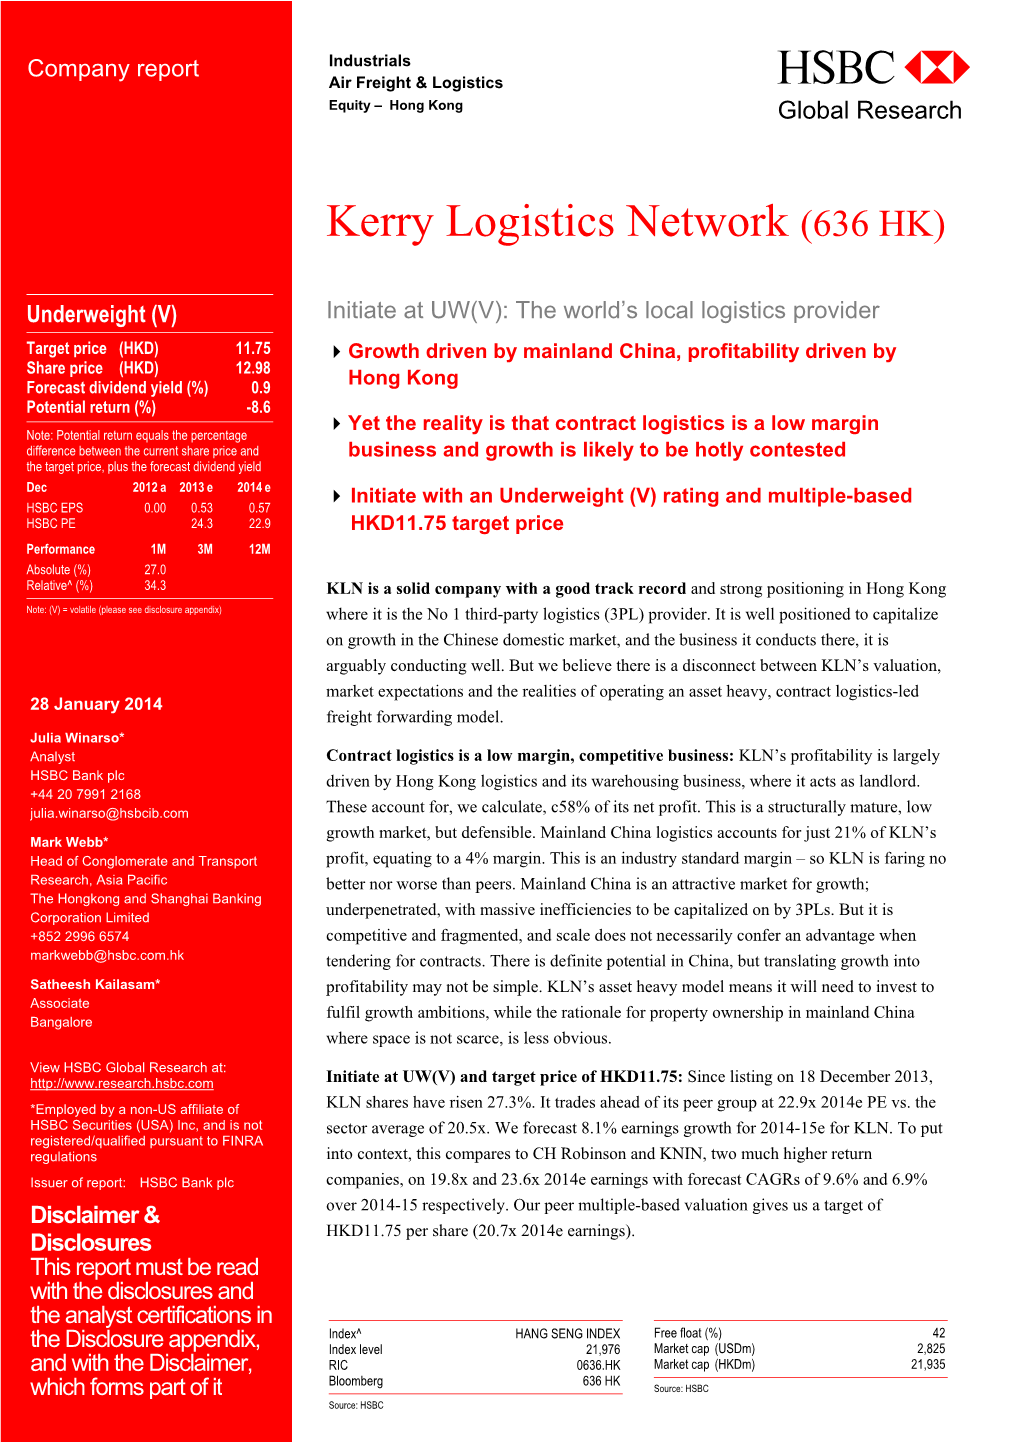 Kerry Logistics Network (636 HK)-Initiate at UW(V)